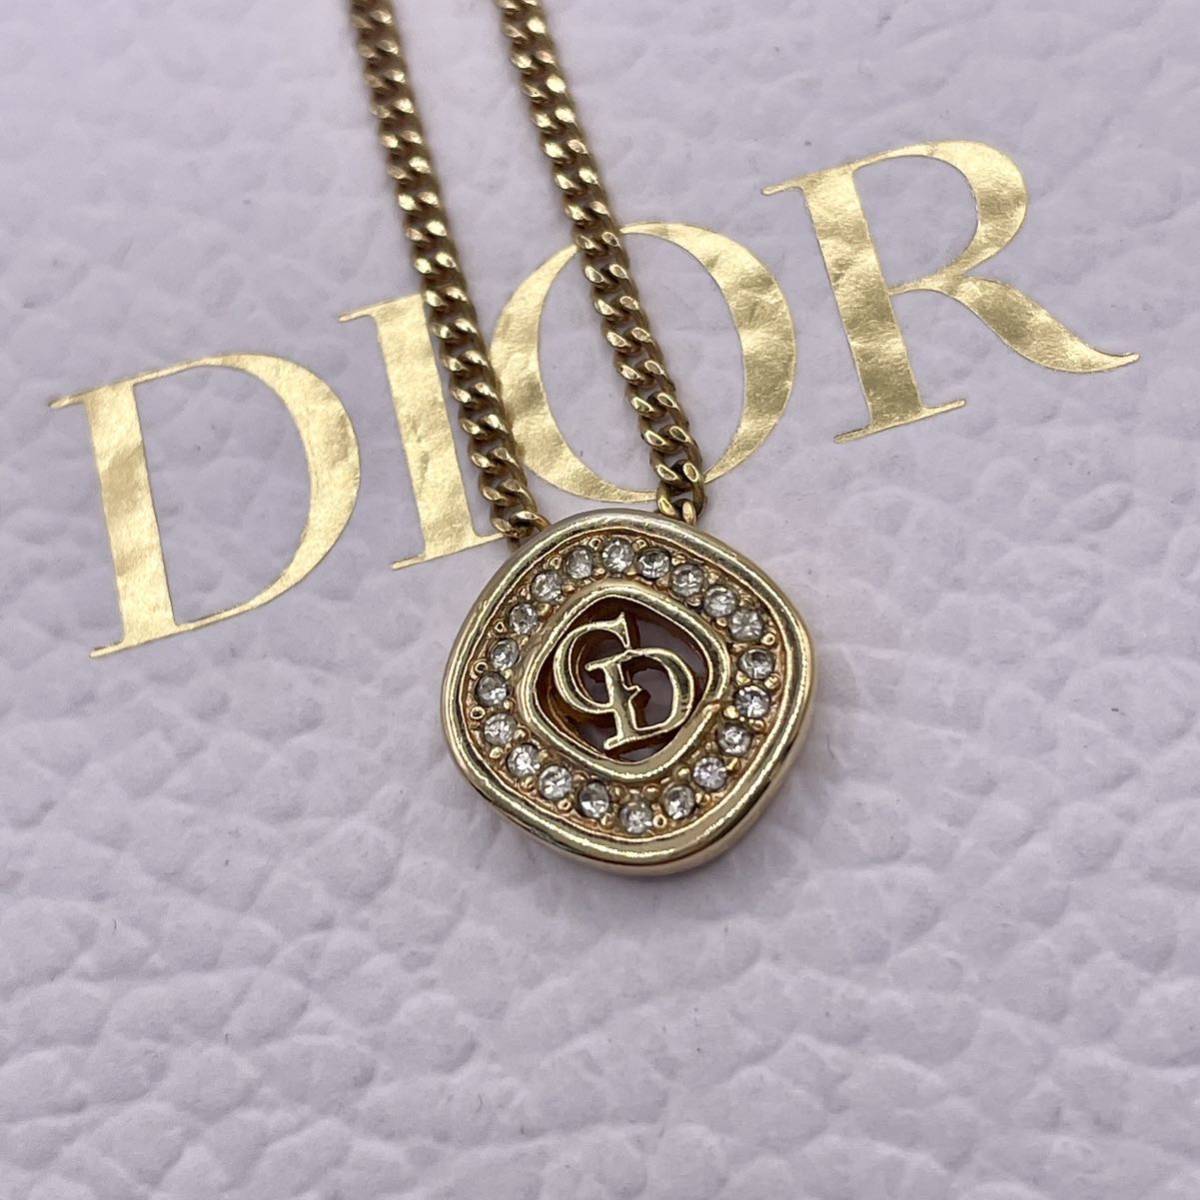 Christian Dior クリスチャンディオール CD ネックレス ラインストーン ロゴ サークル アクセサリー ゴールド金具 ゴールド ロゴ刻印